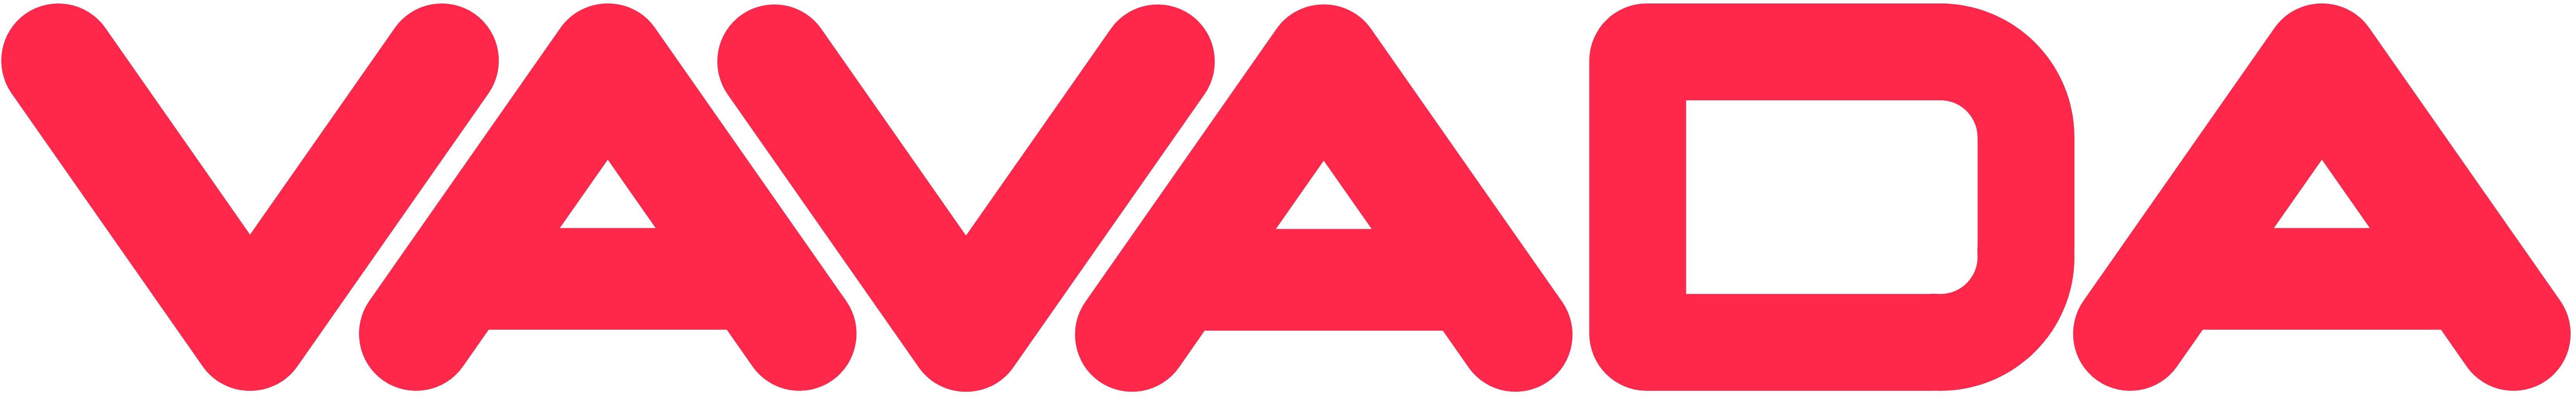 Offizielles Logo des Casinos Vavada